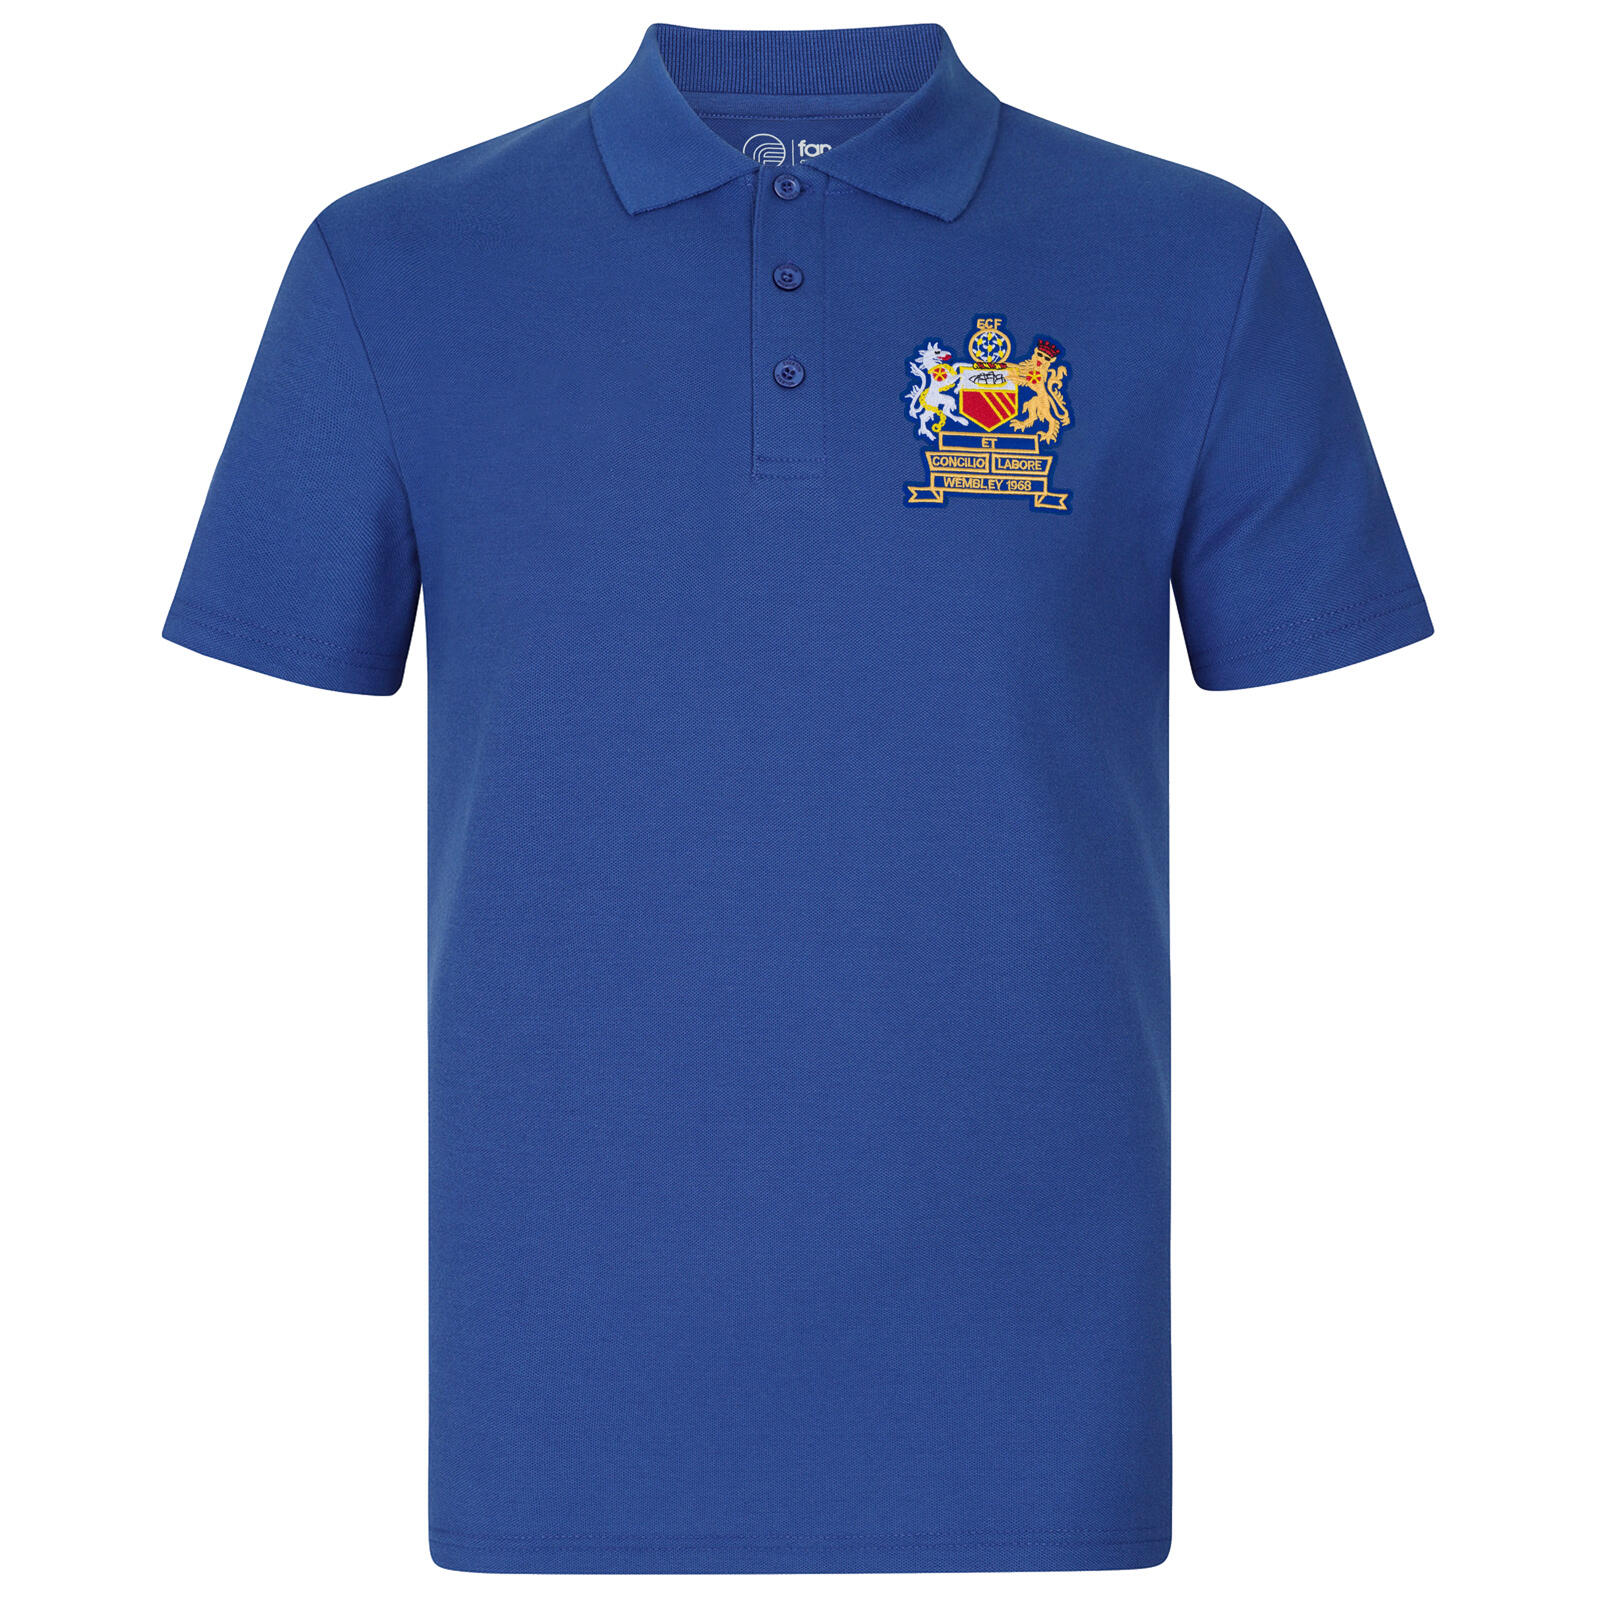 FAN ORIGINALS Fan Originals Manchester Polo Shirt Mens 1968 European Colours Blue